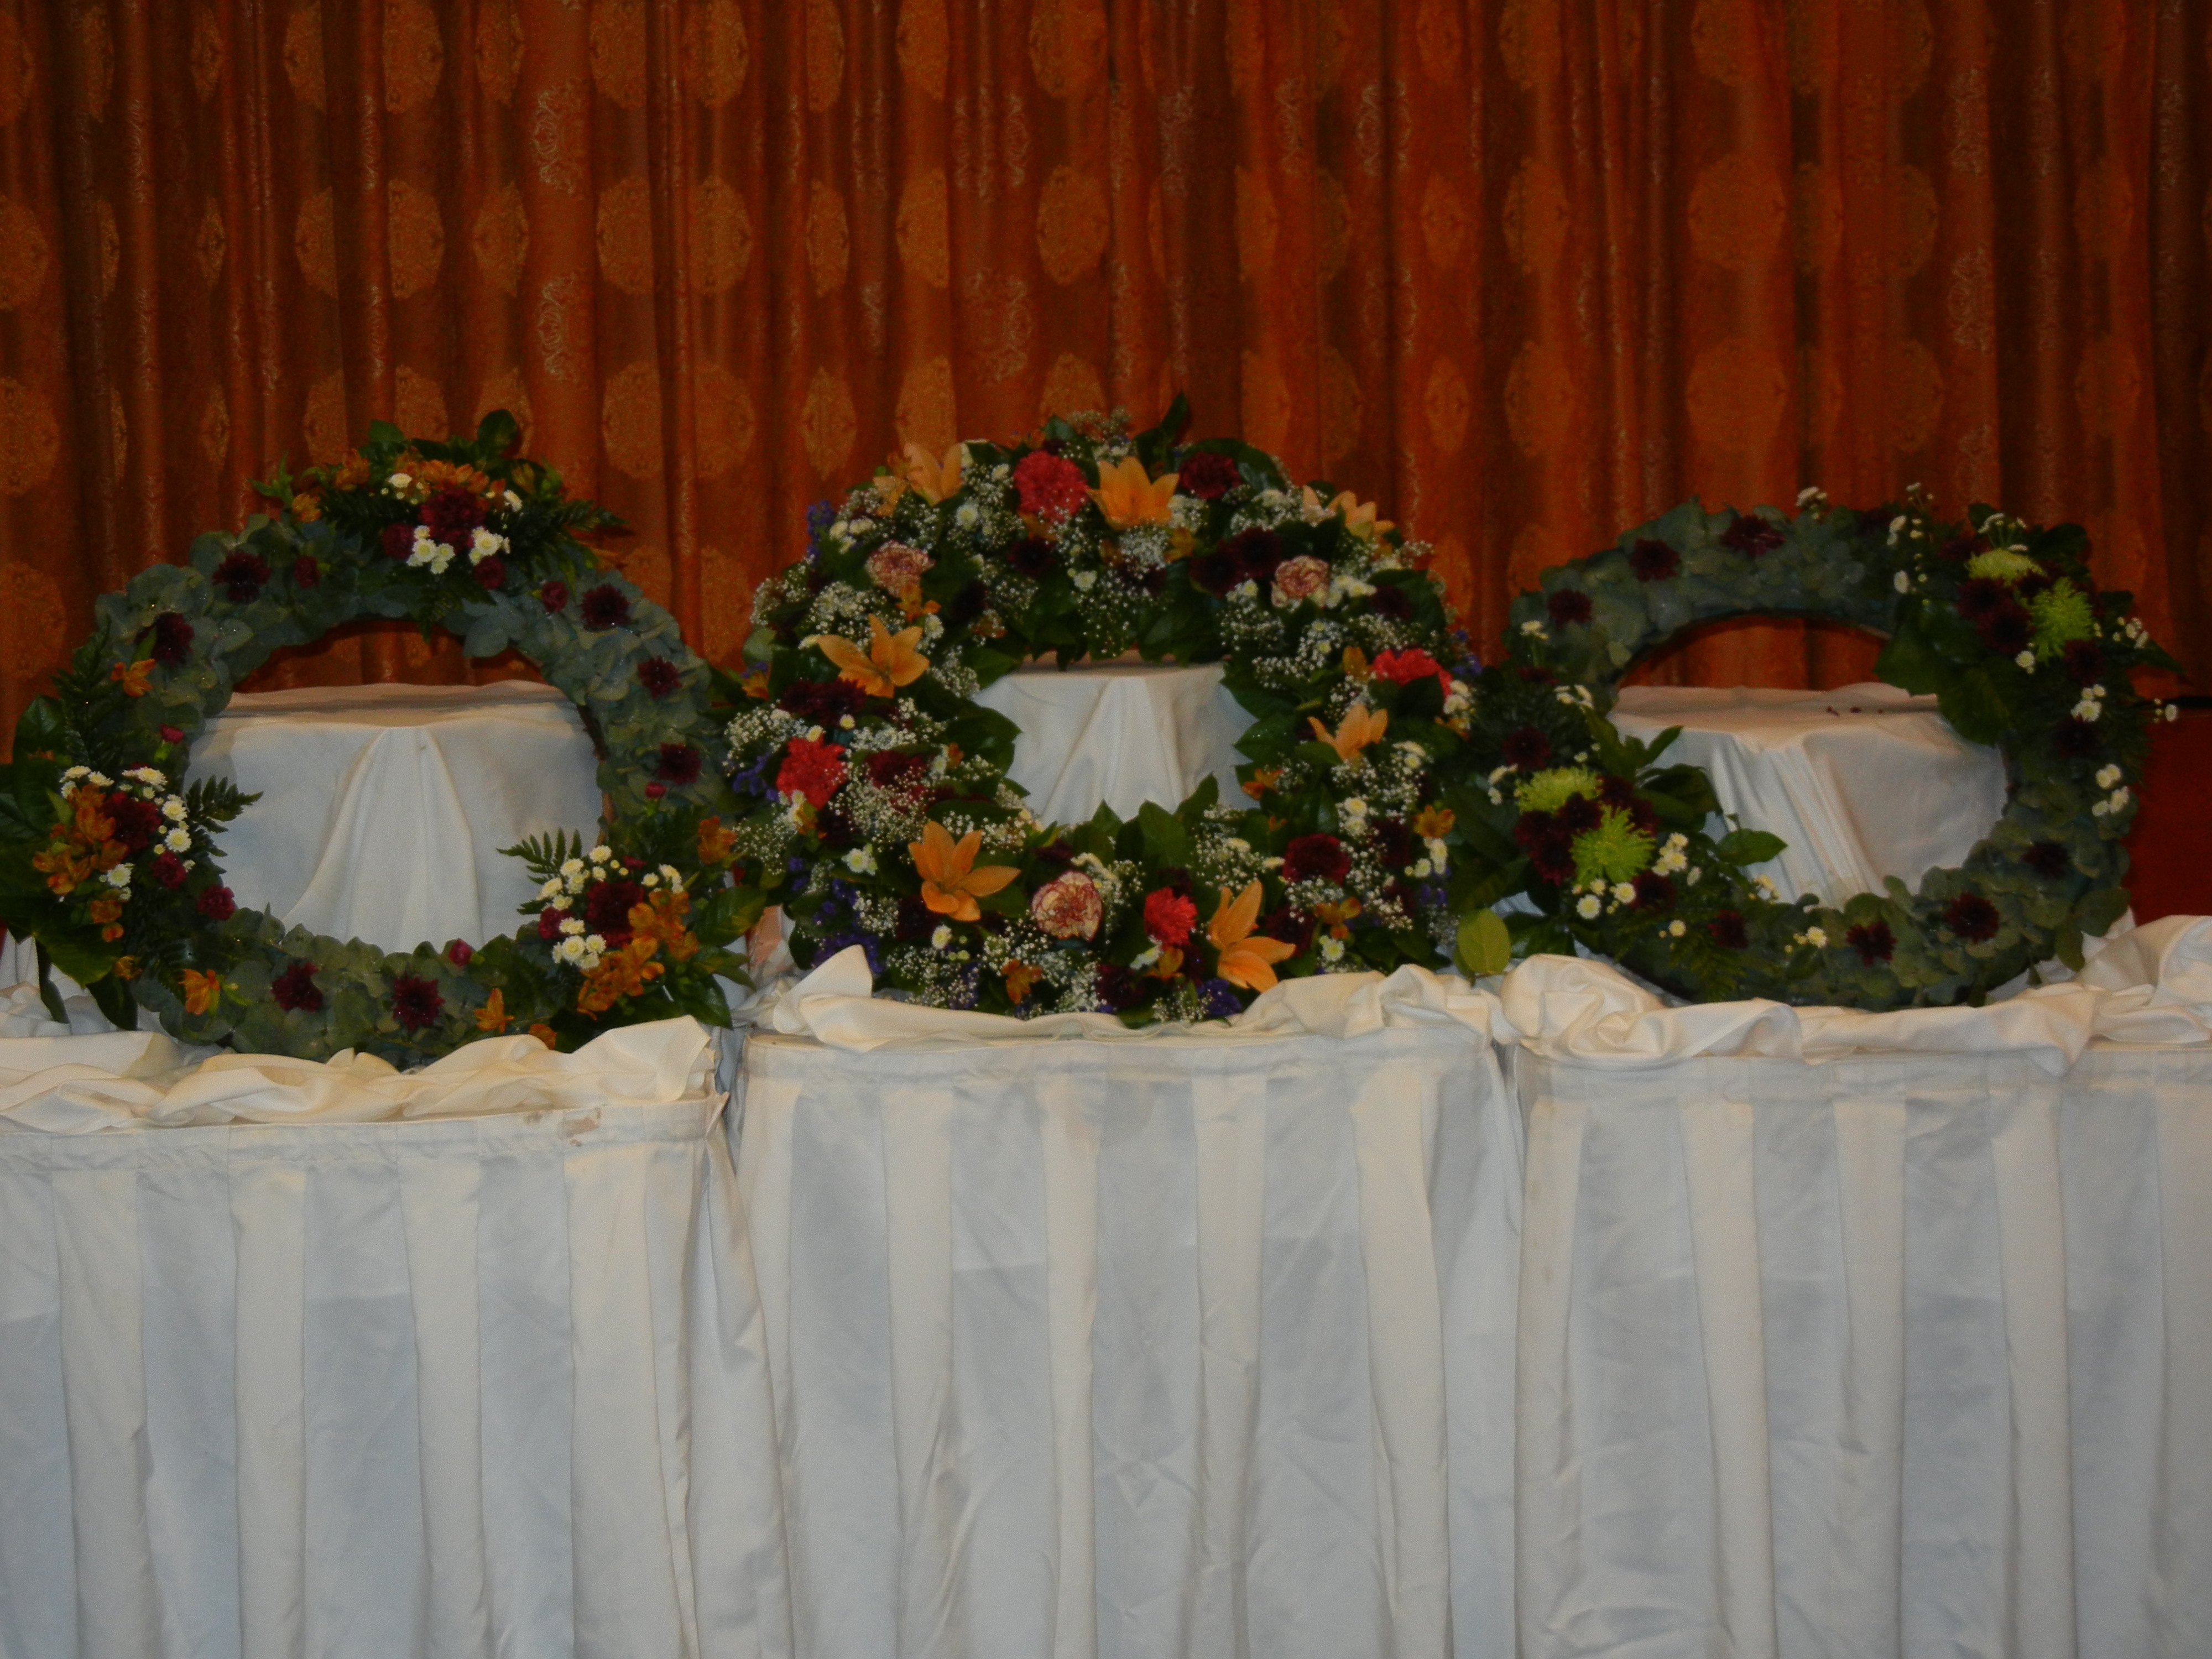 The Three Wreaths